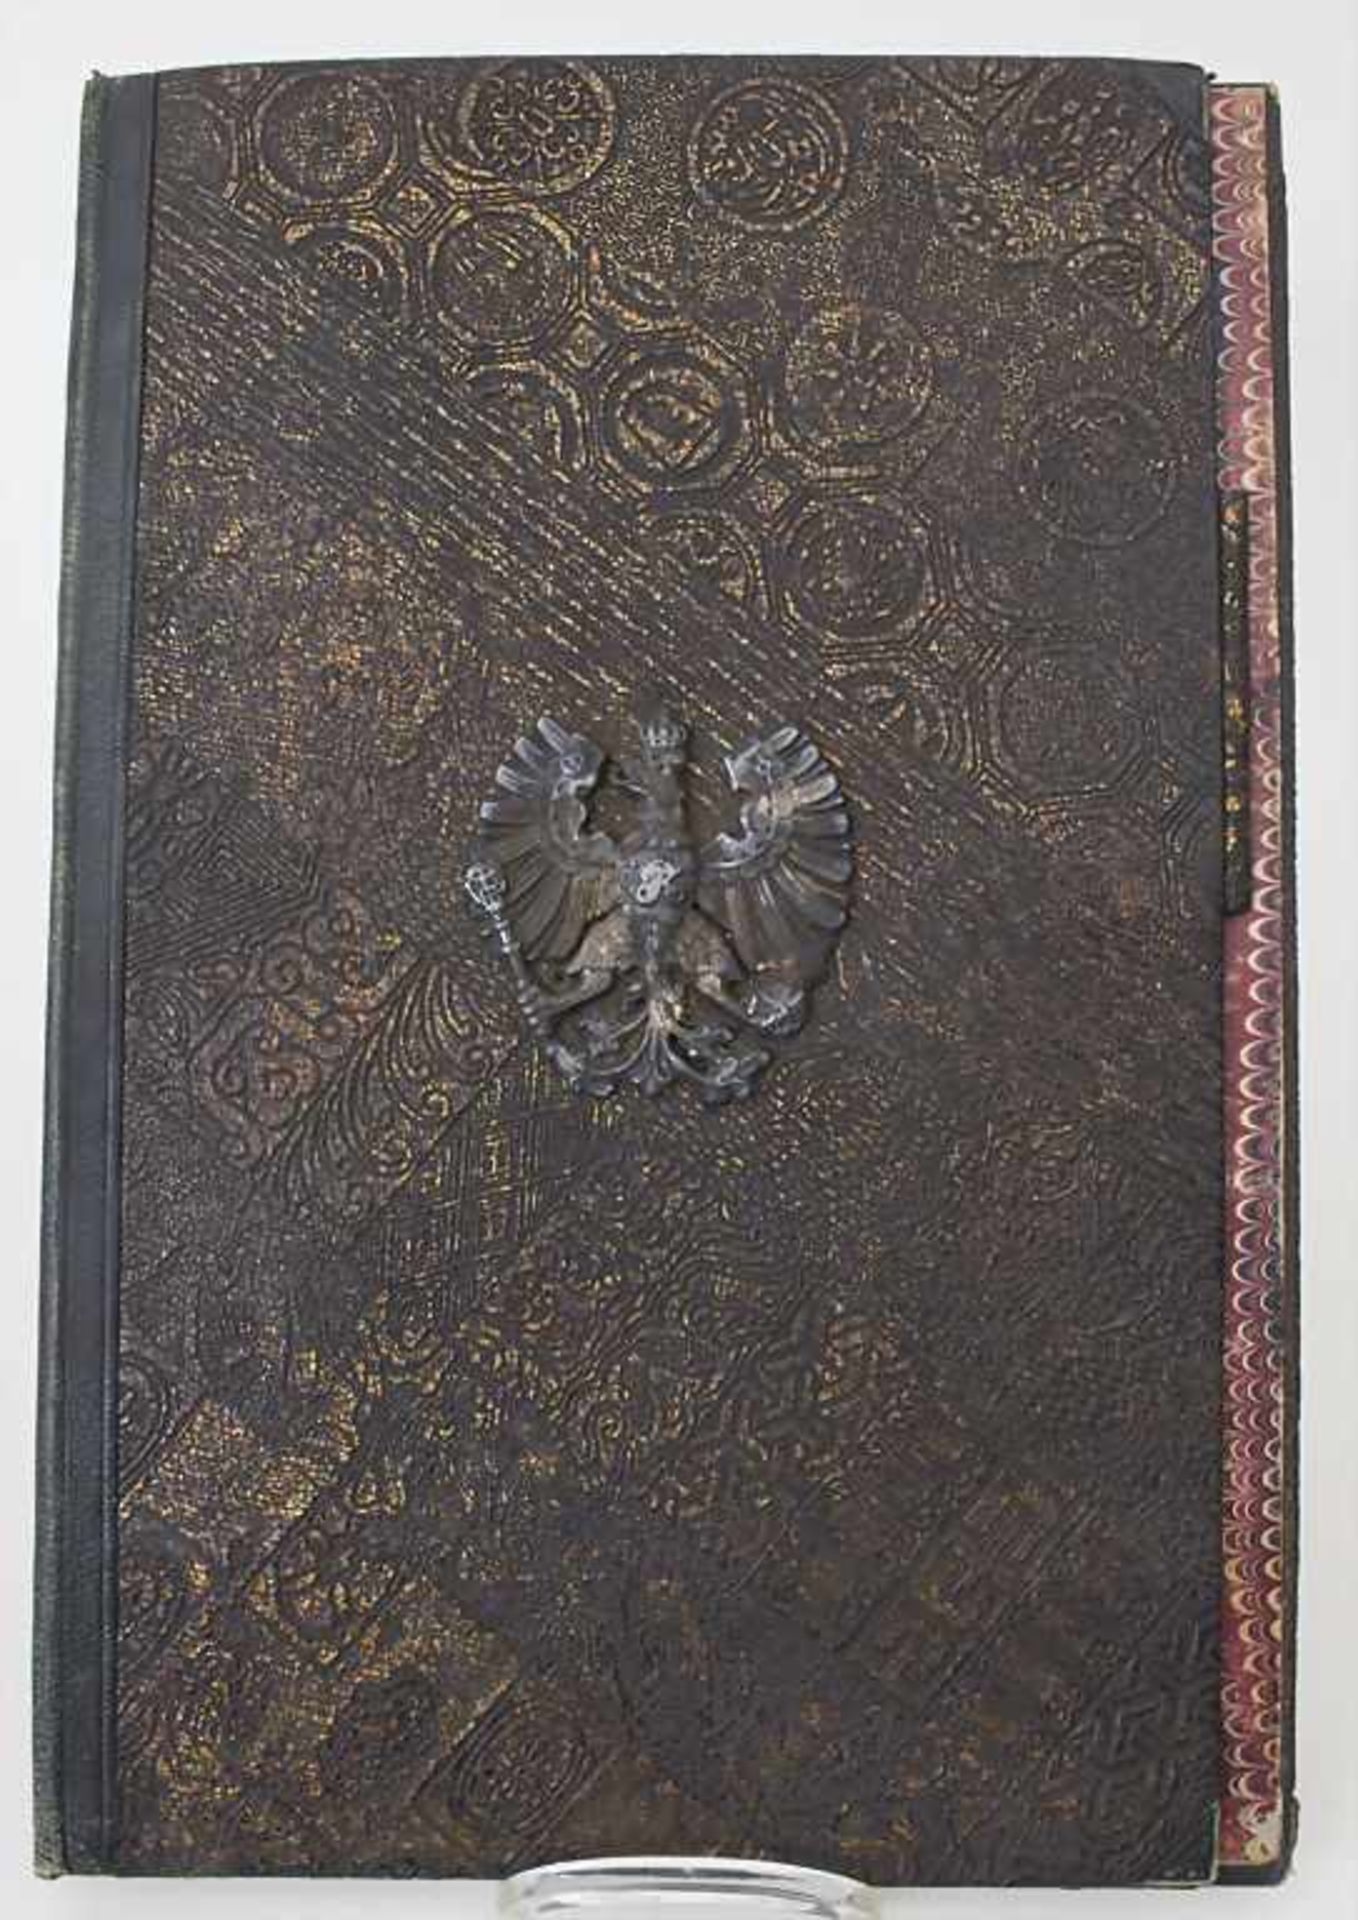 Dokumentenmappe / Document folder, Königreich Preussen, Ende 19. Jh.Material: Dokumentenmappe,